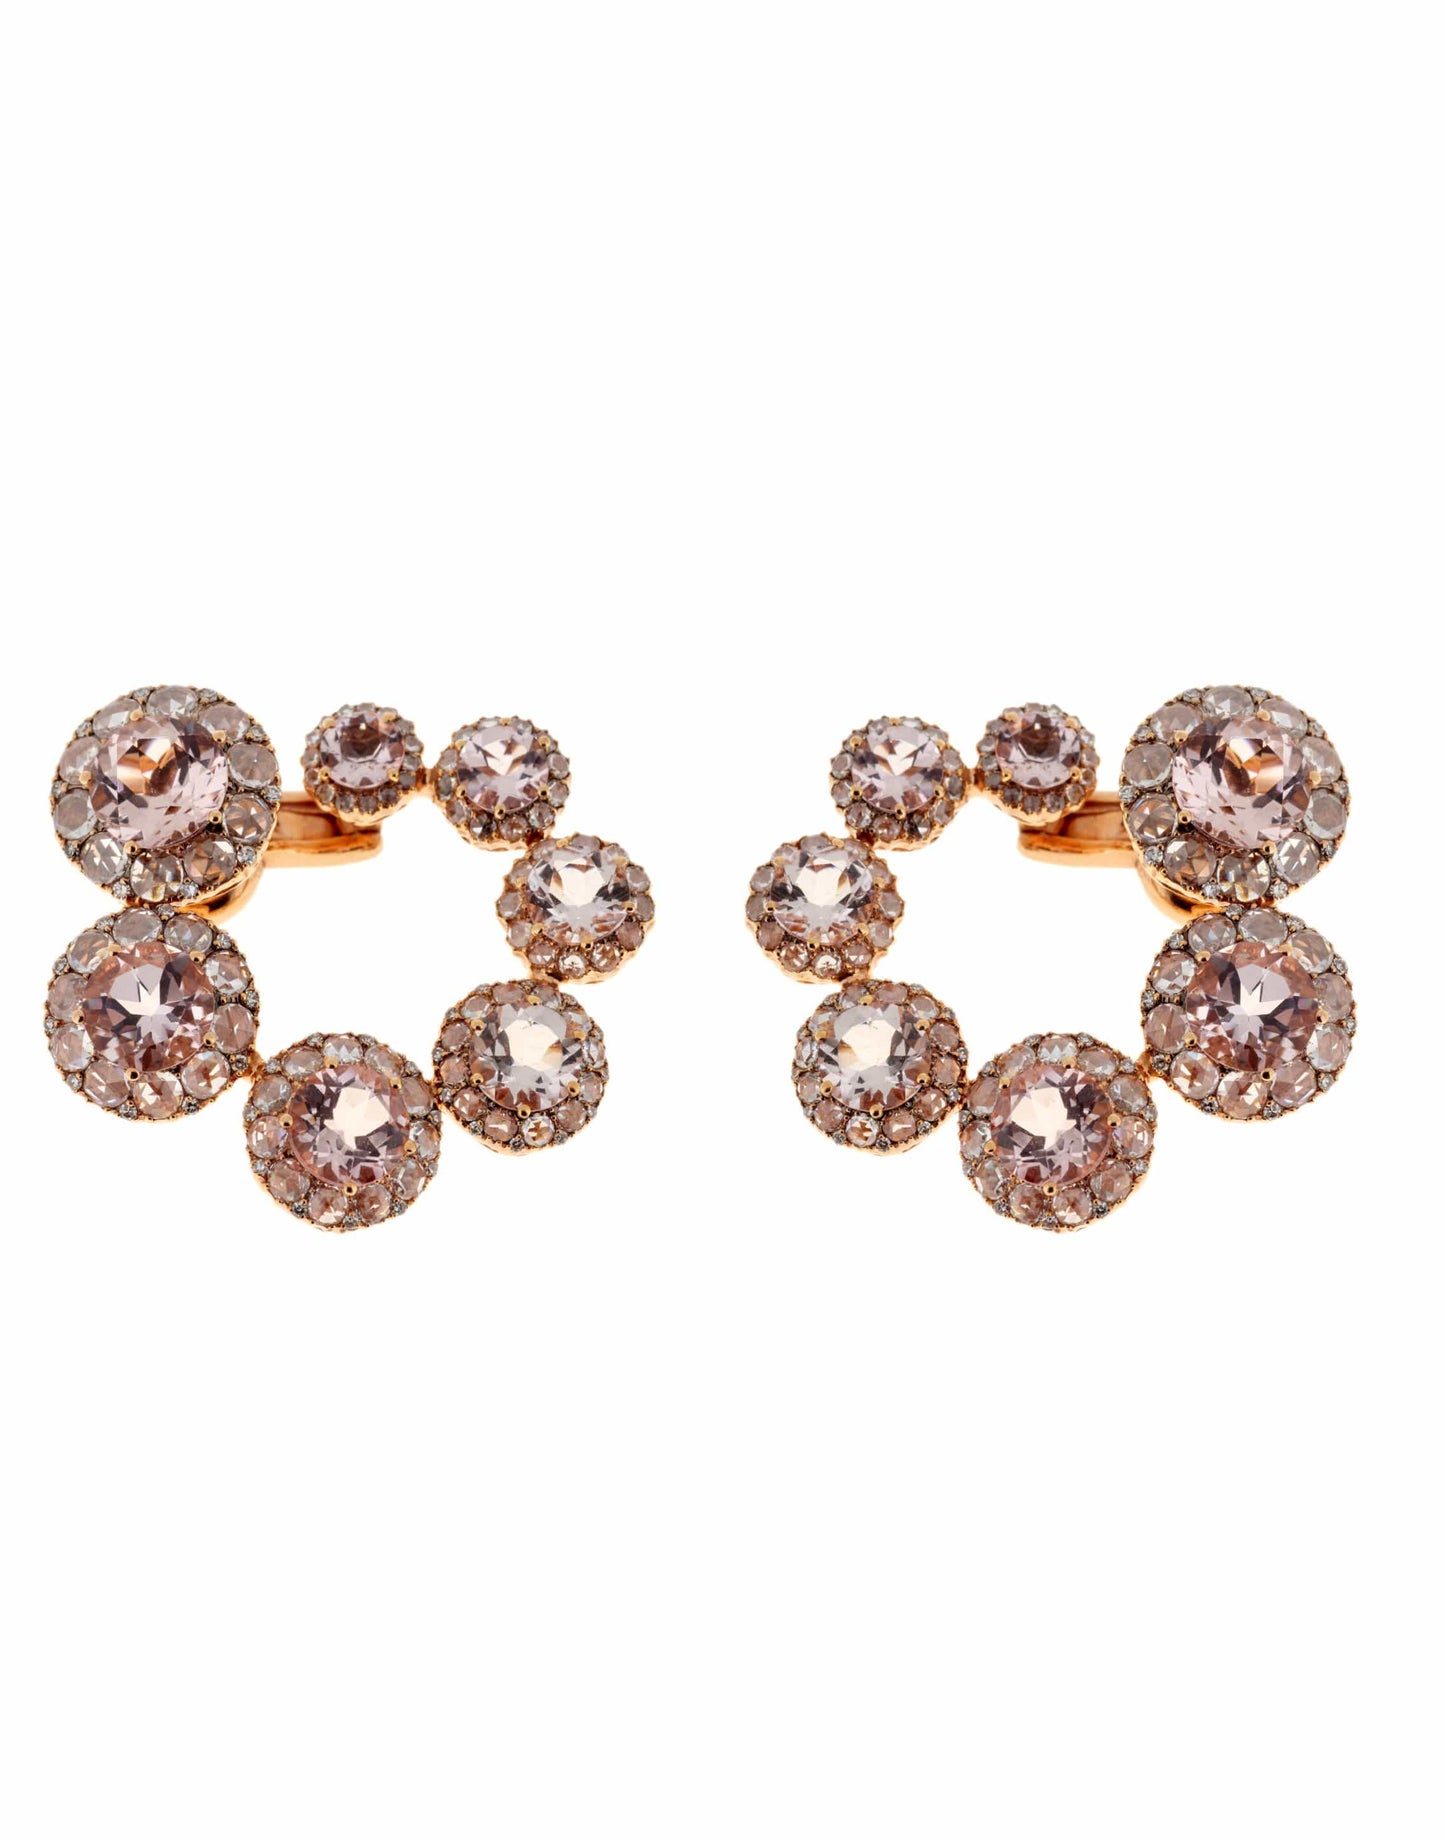 SELIM MOUZANNAR-Morganite and Diamond Earrings-